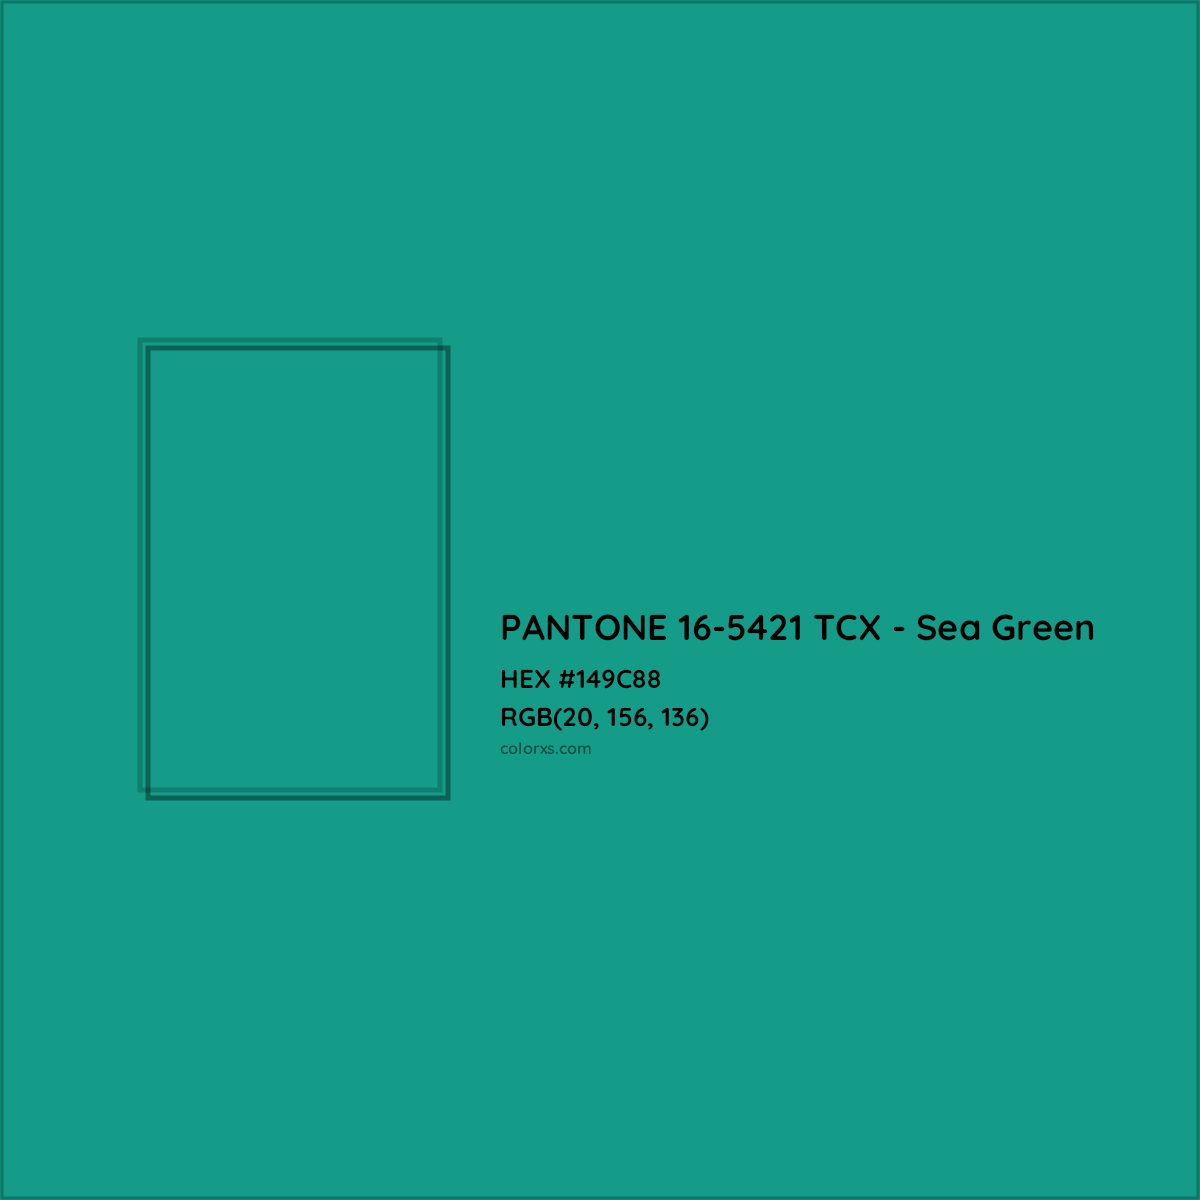 HEX #149C88 PANTONE 16-5421 TCX - Sea Green CMS Pantone TCX - Color Code